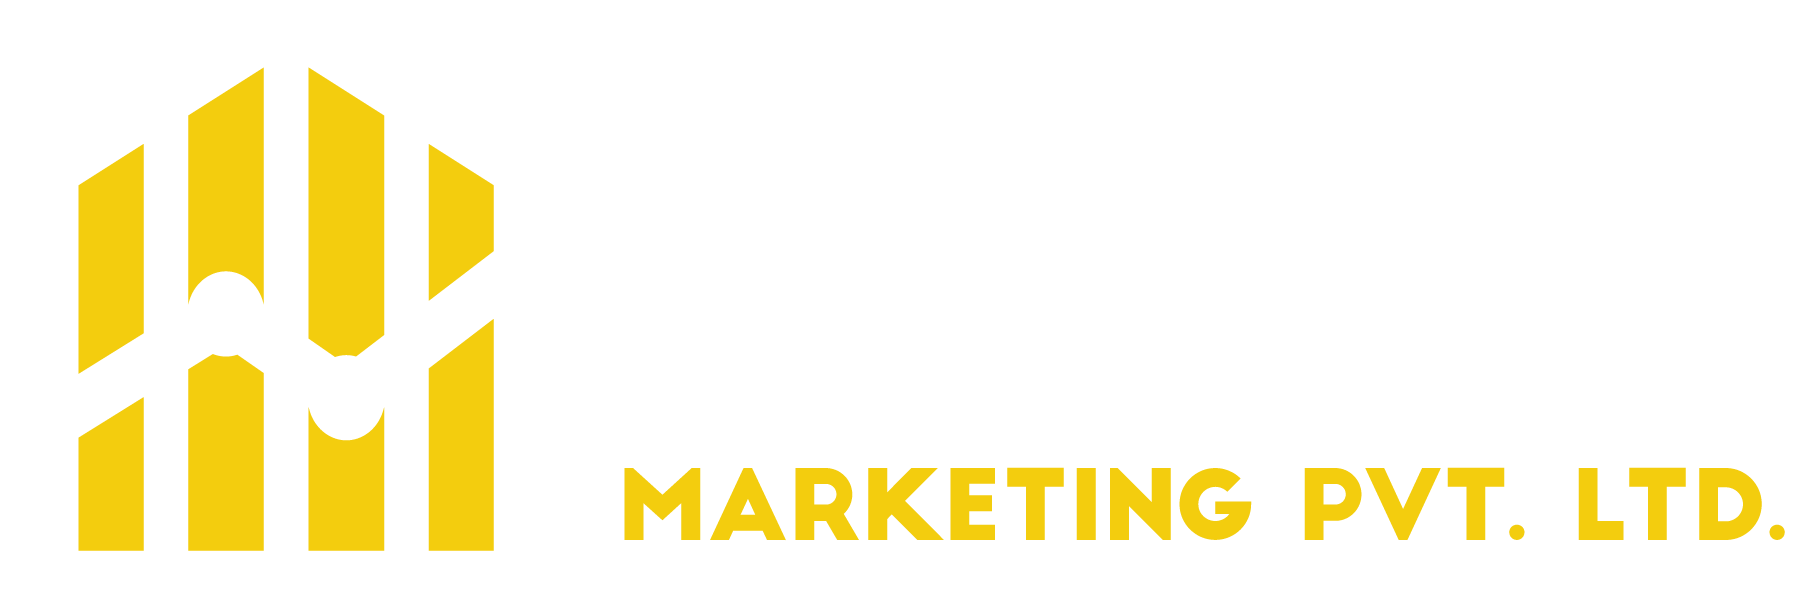 Timeline Marketing